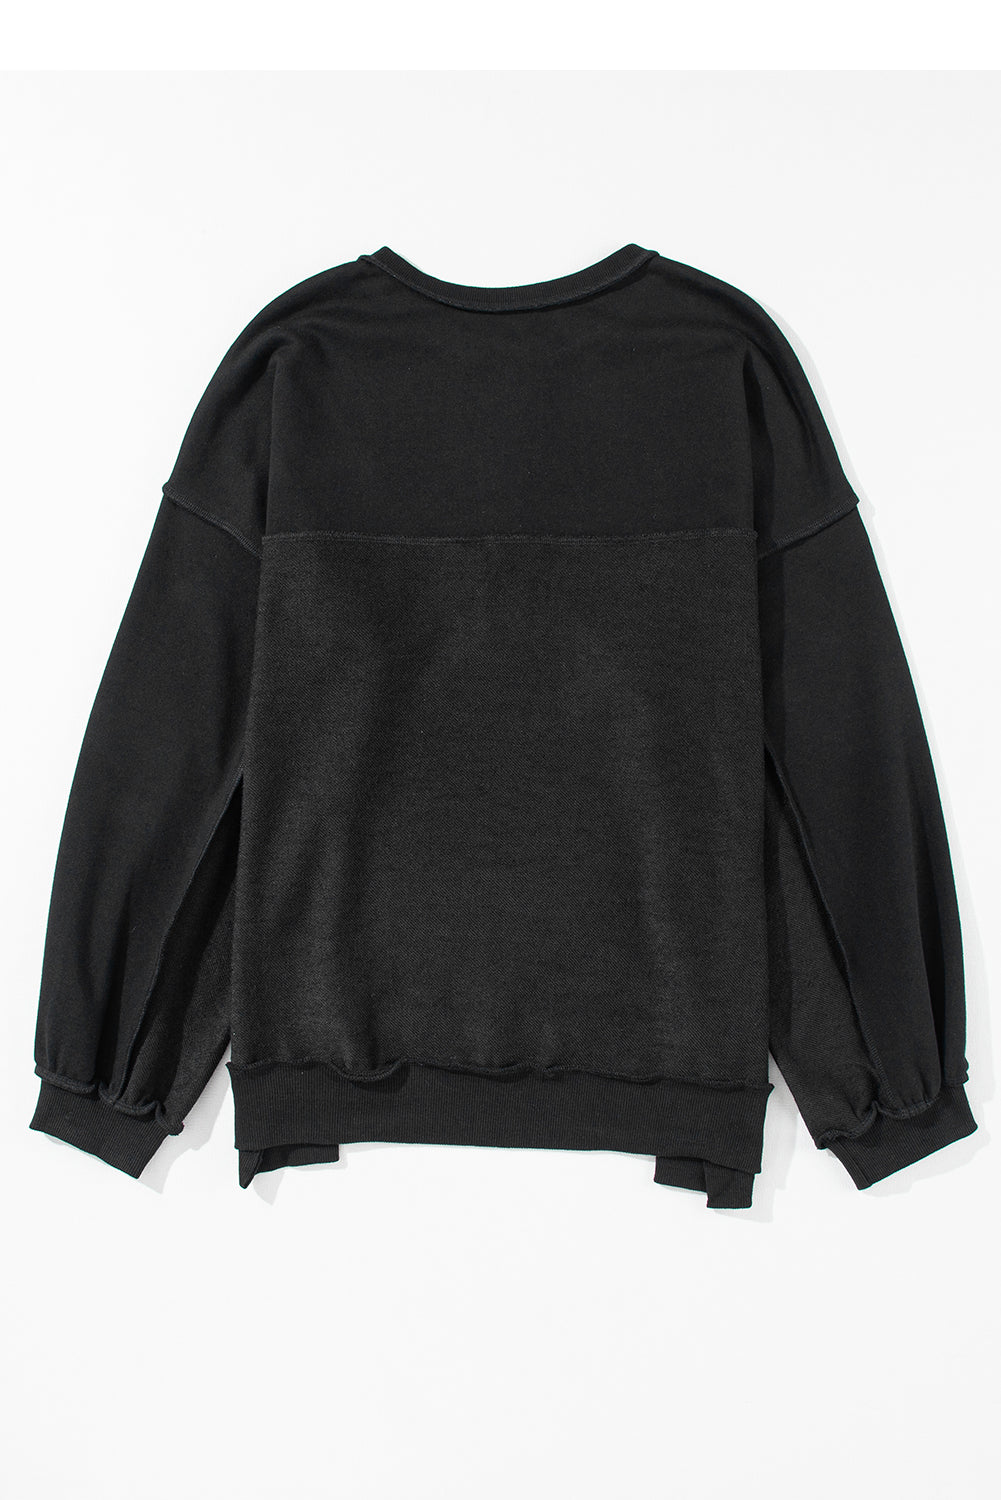 Black Oversized Exposed Seam Henley Sweatshirt-13